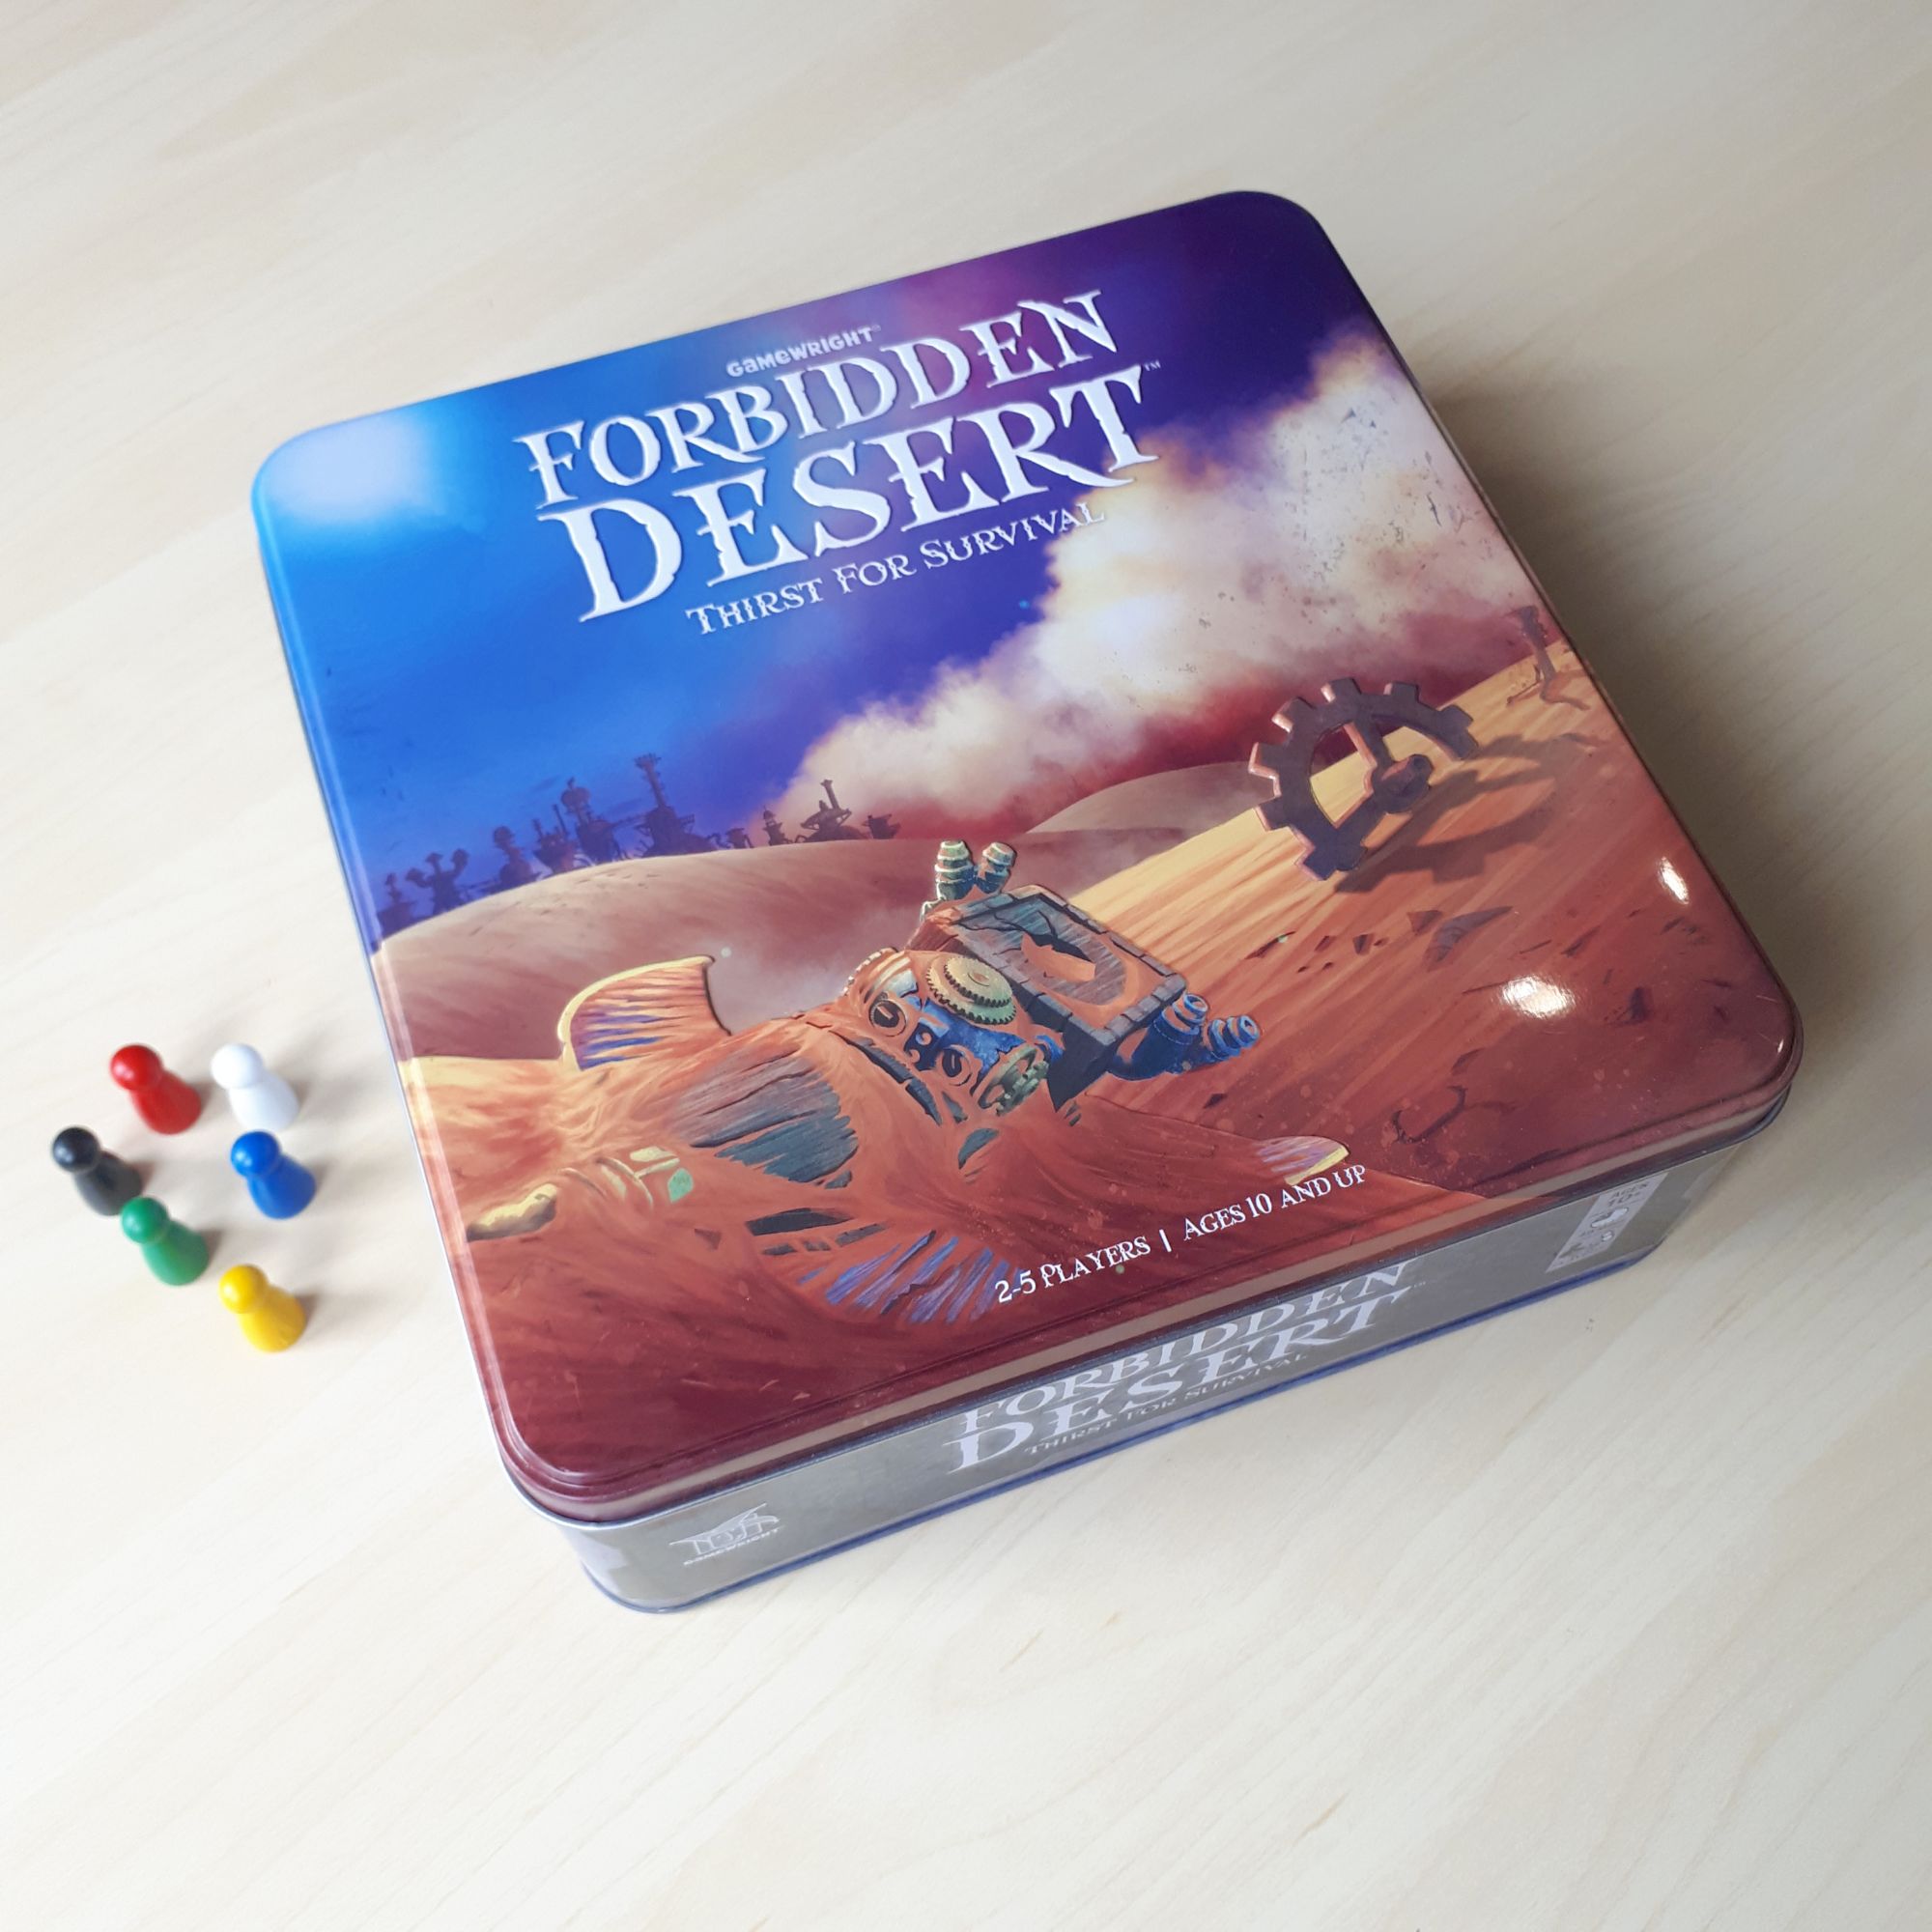 Forbidden Desert Game